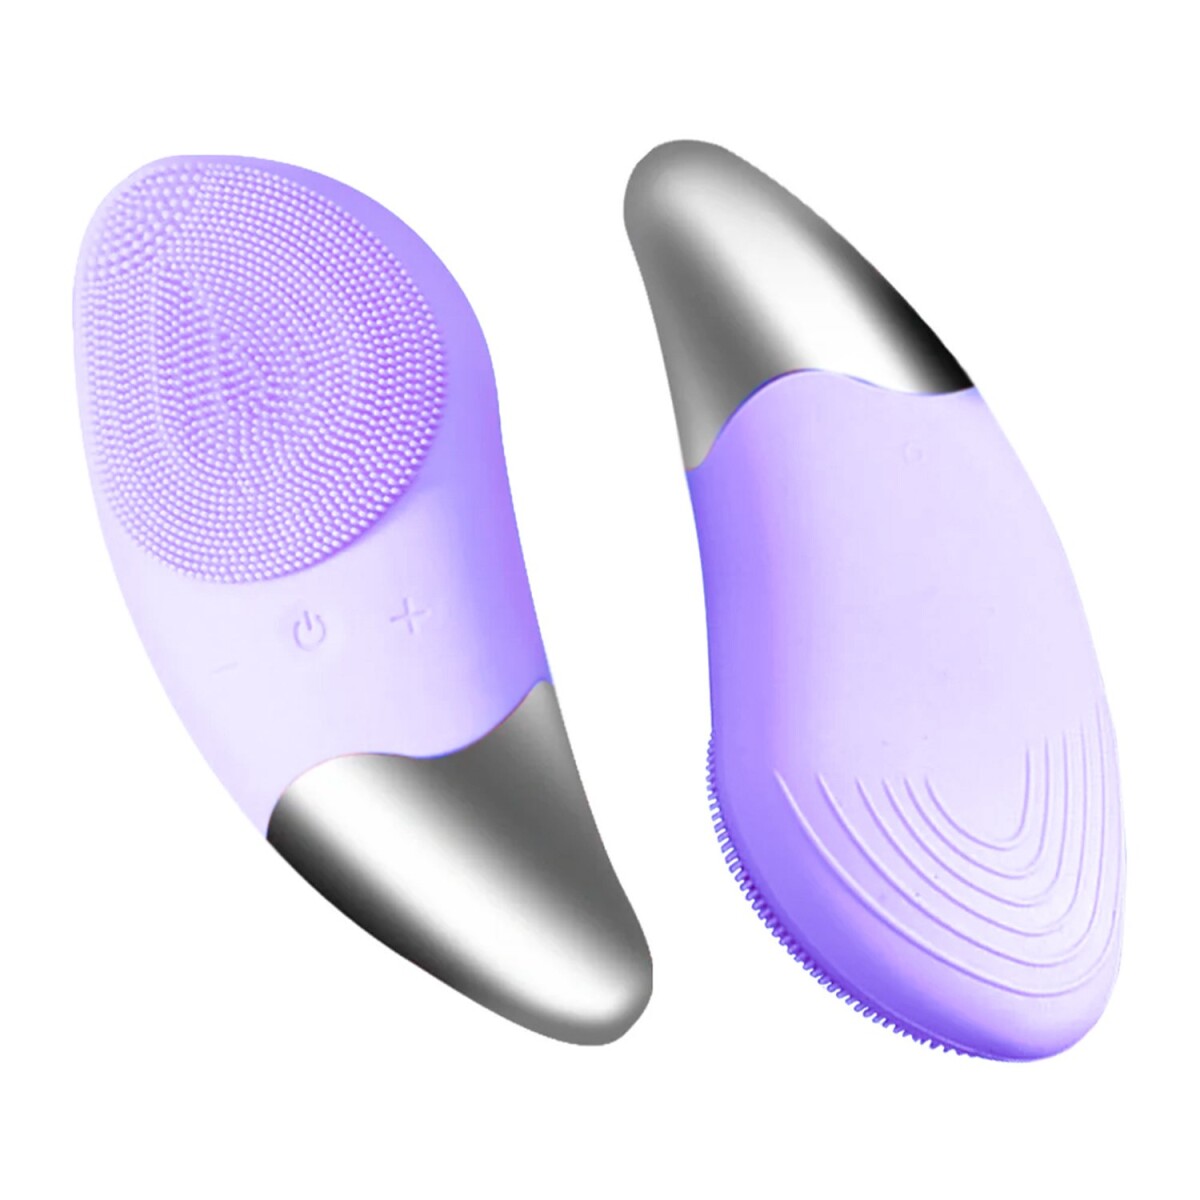 Cepillo Masajeador Limpiador Facial Contorno Ojos Silicona - Variante Color Violeta 